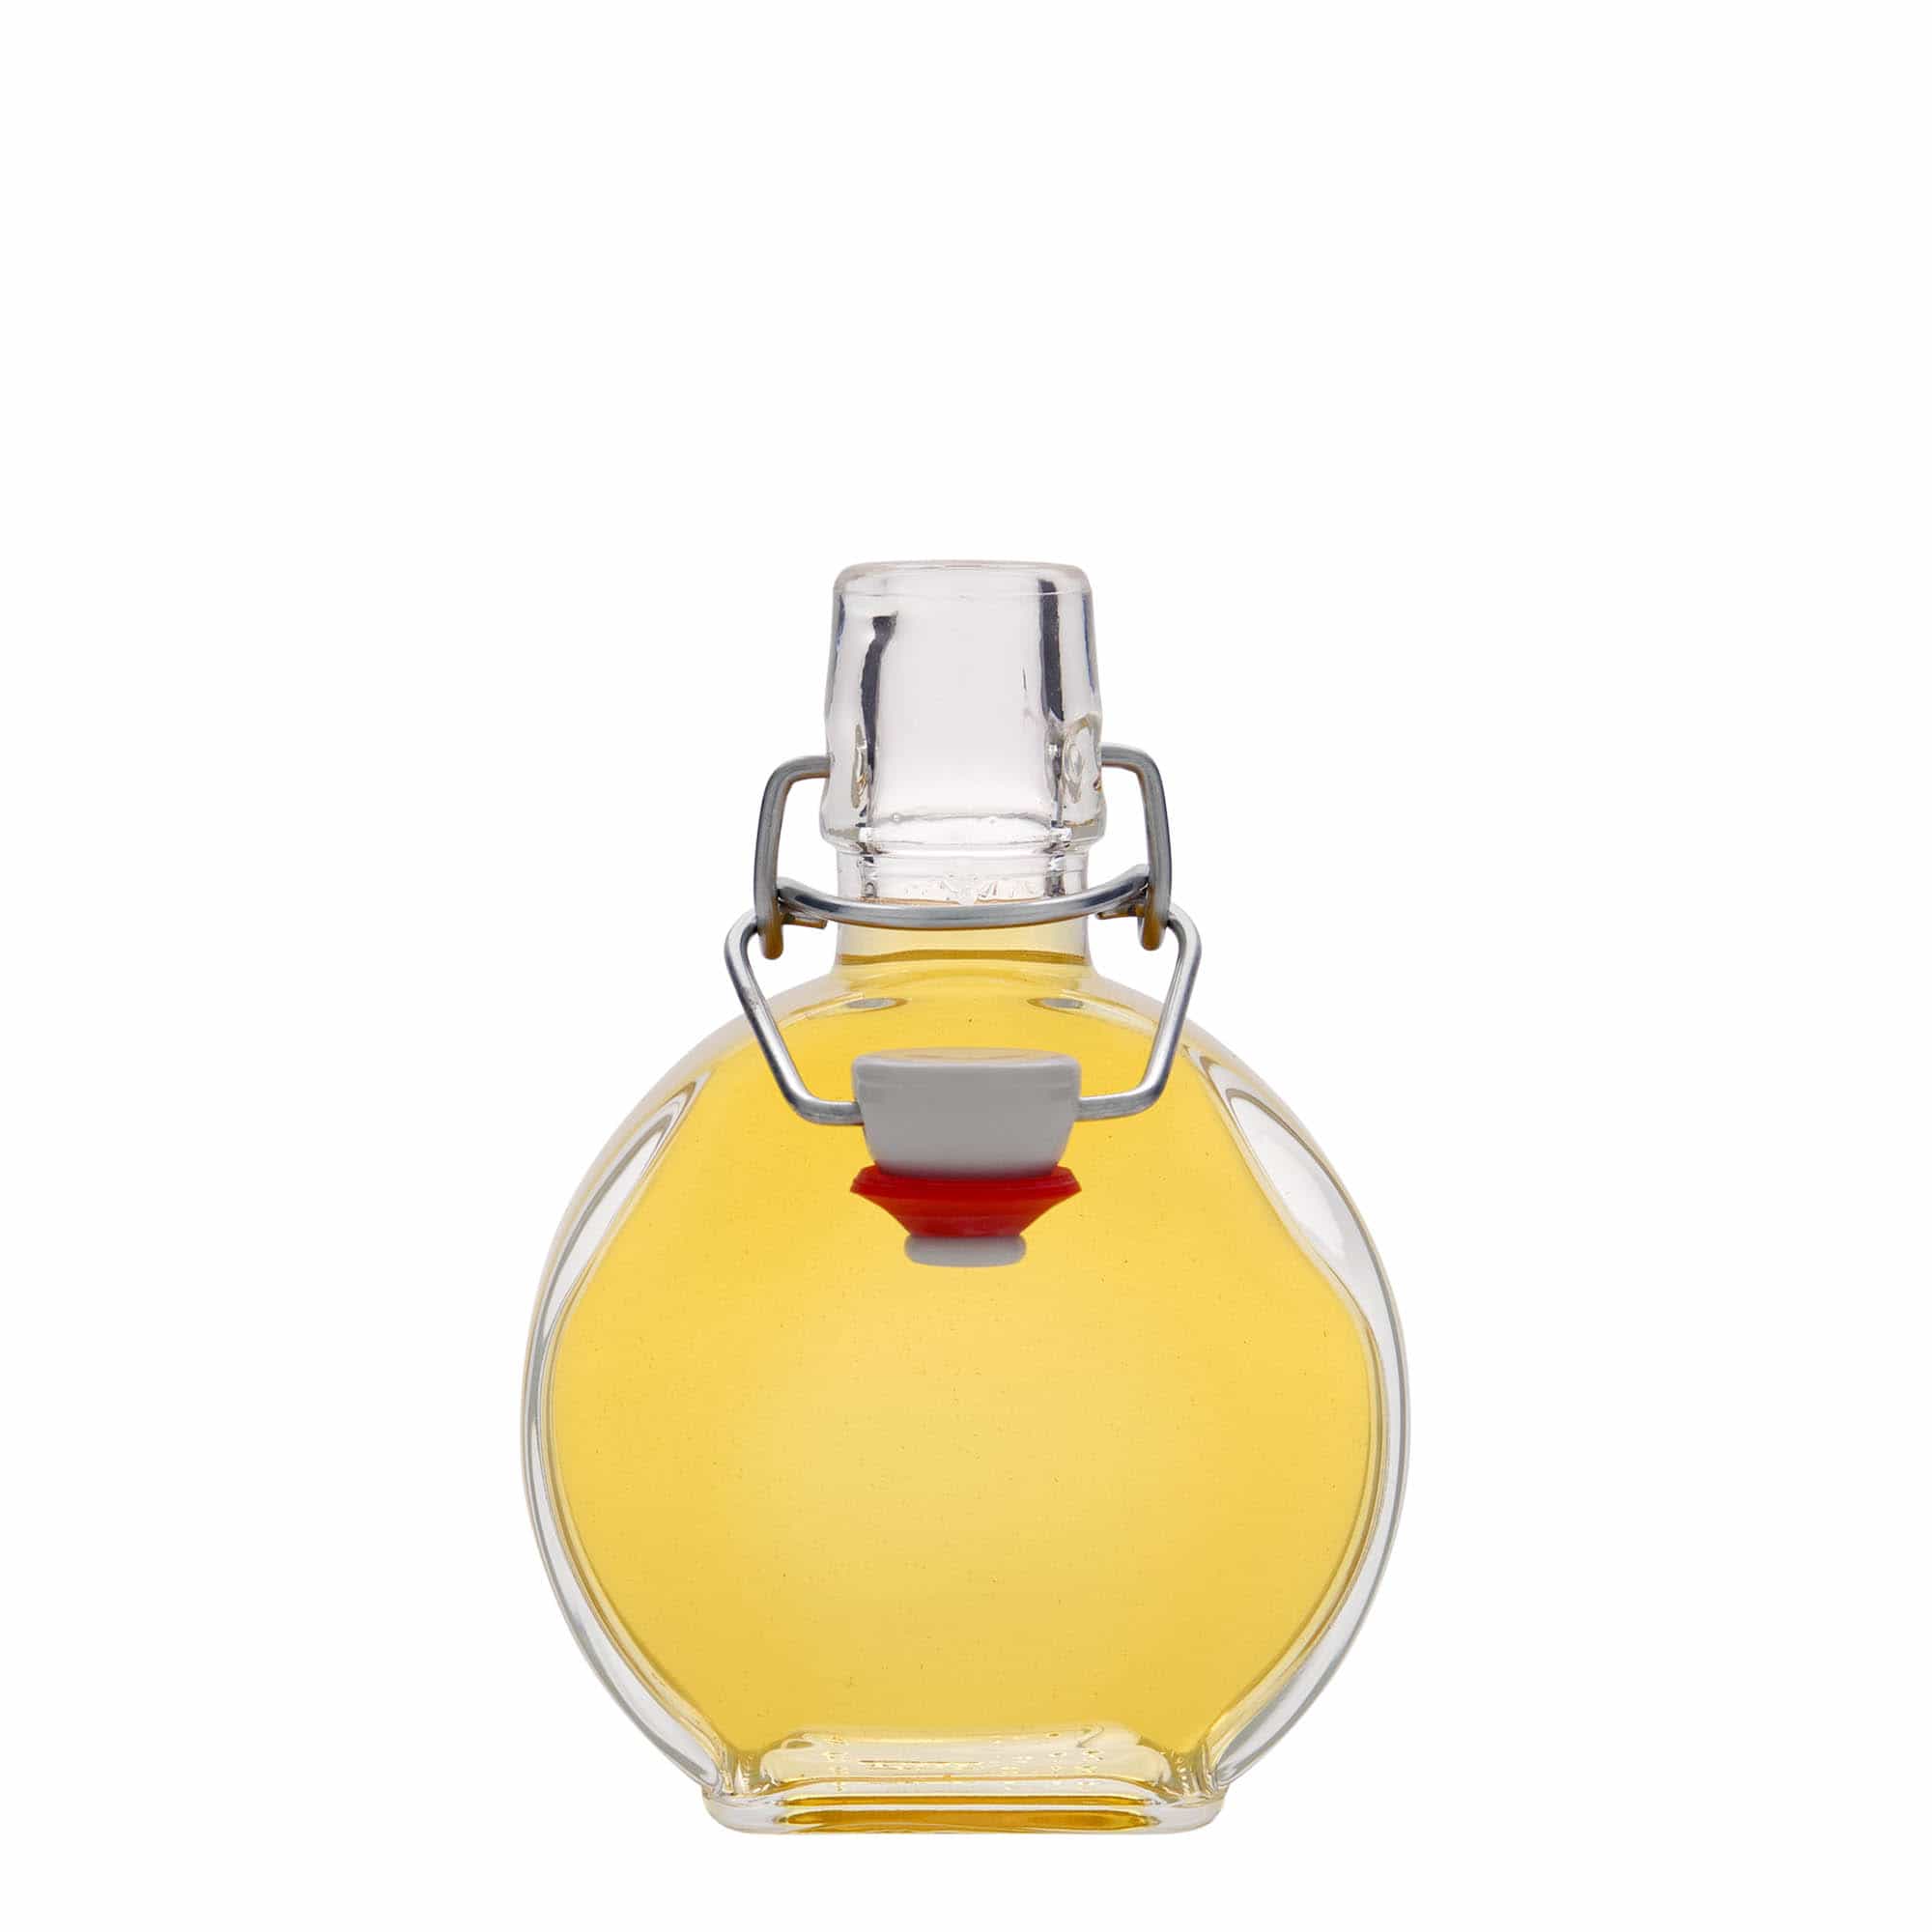 200 ml glass bottle 'Sensatione', rectangular, closure: swing top